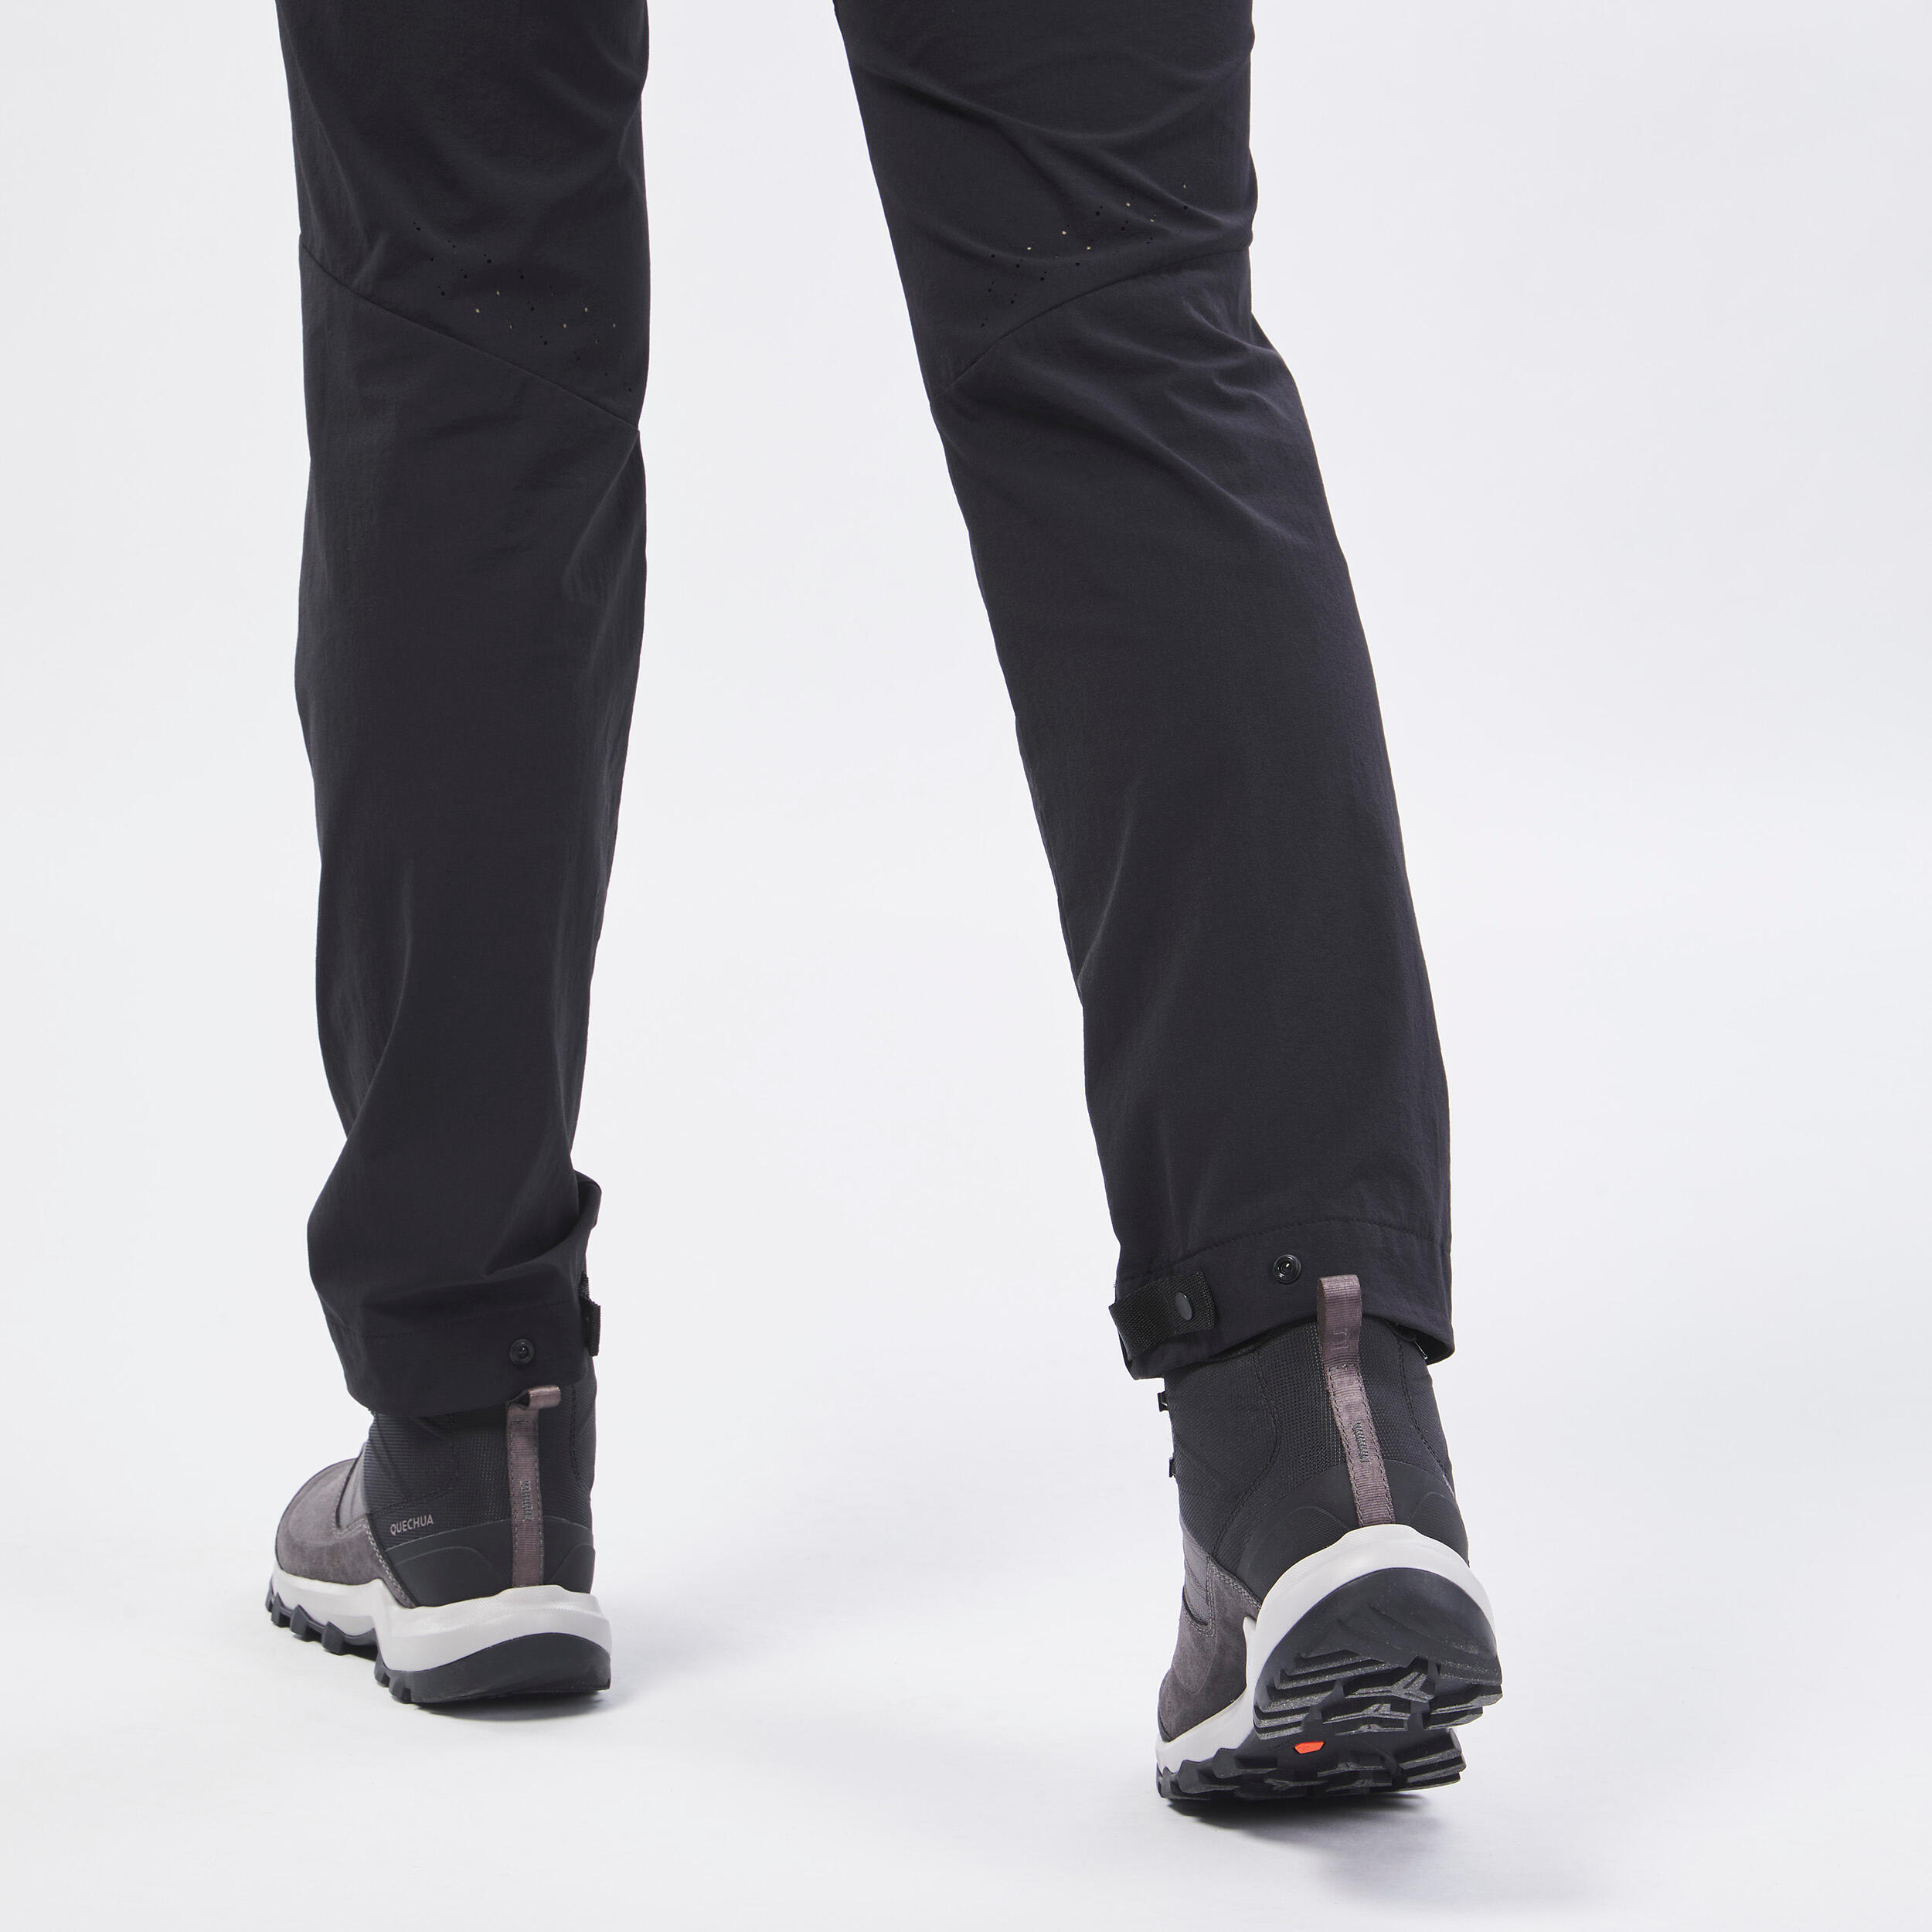 Women's Mountain Walking Trousers - MH500 - Black 6/6